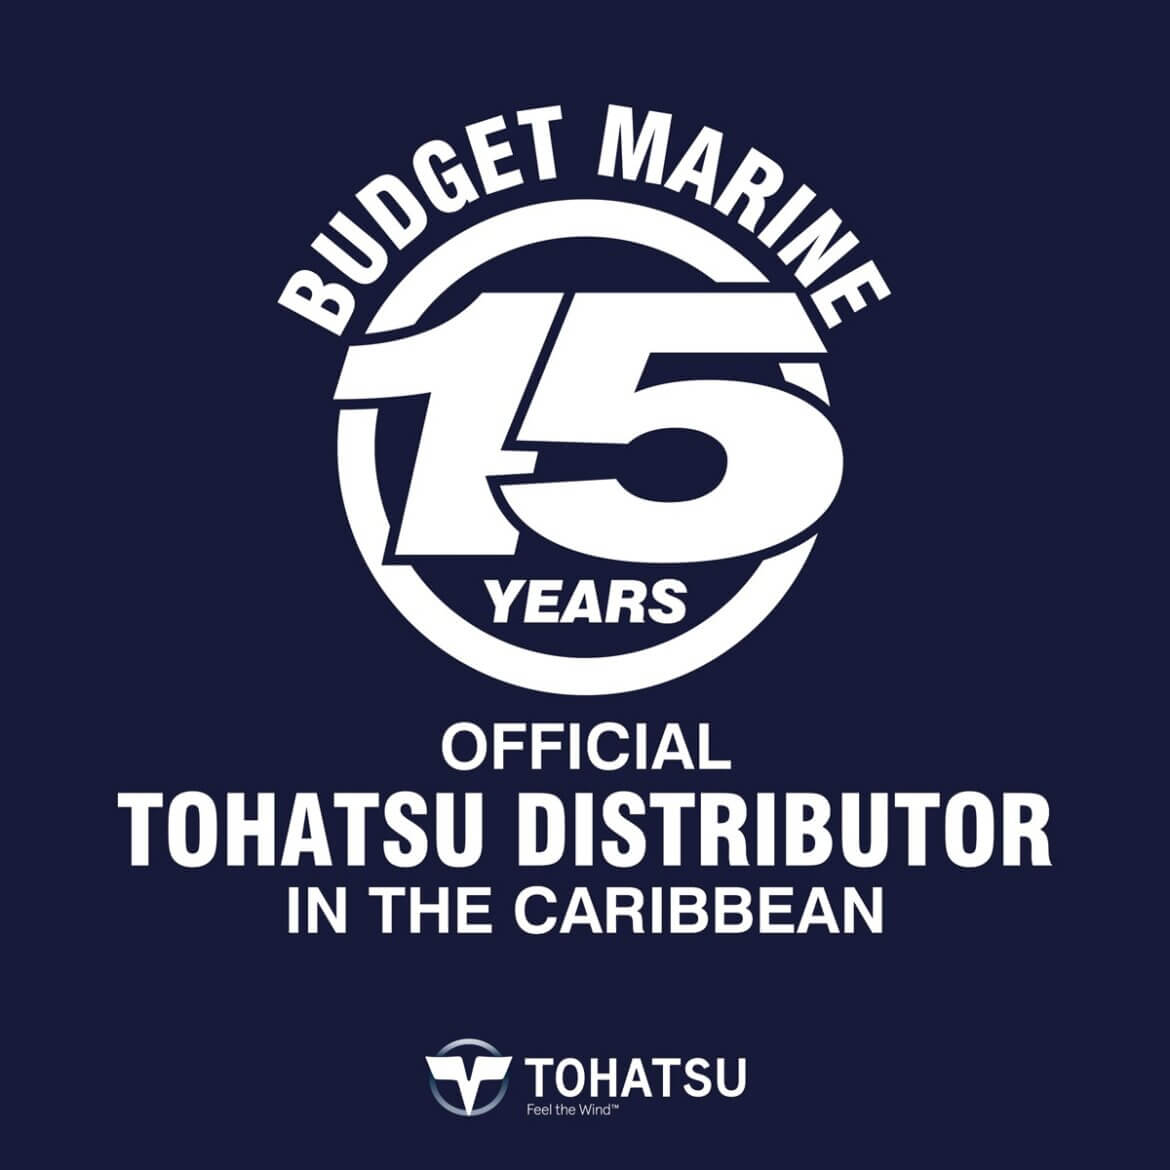 Budget Marine Trinidad 8